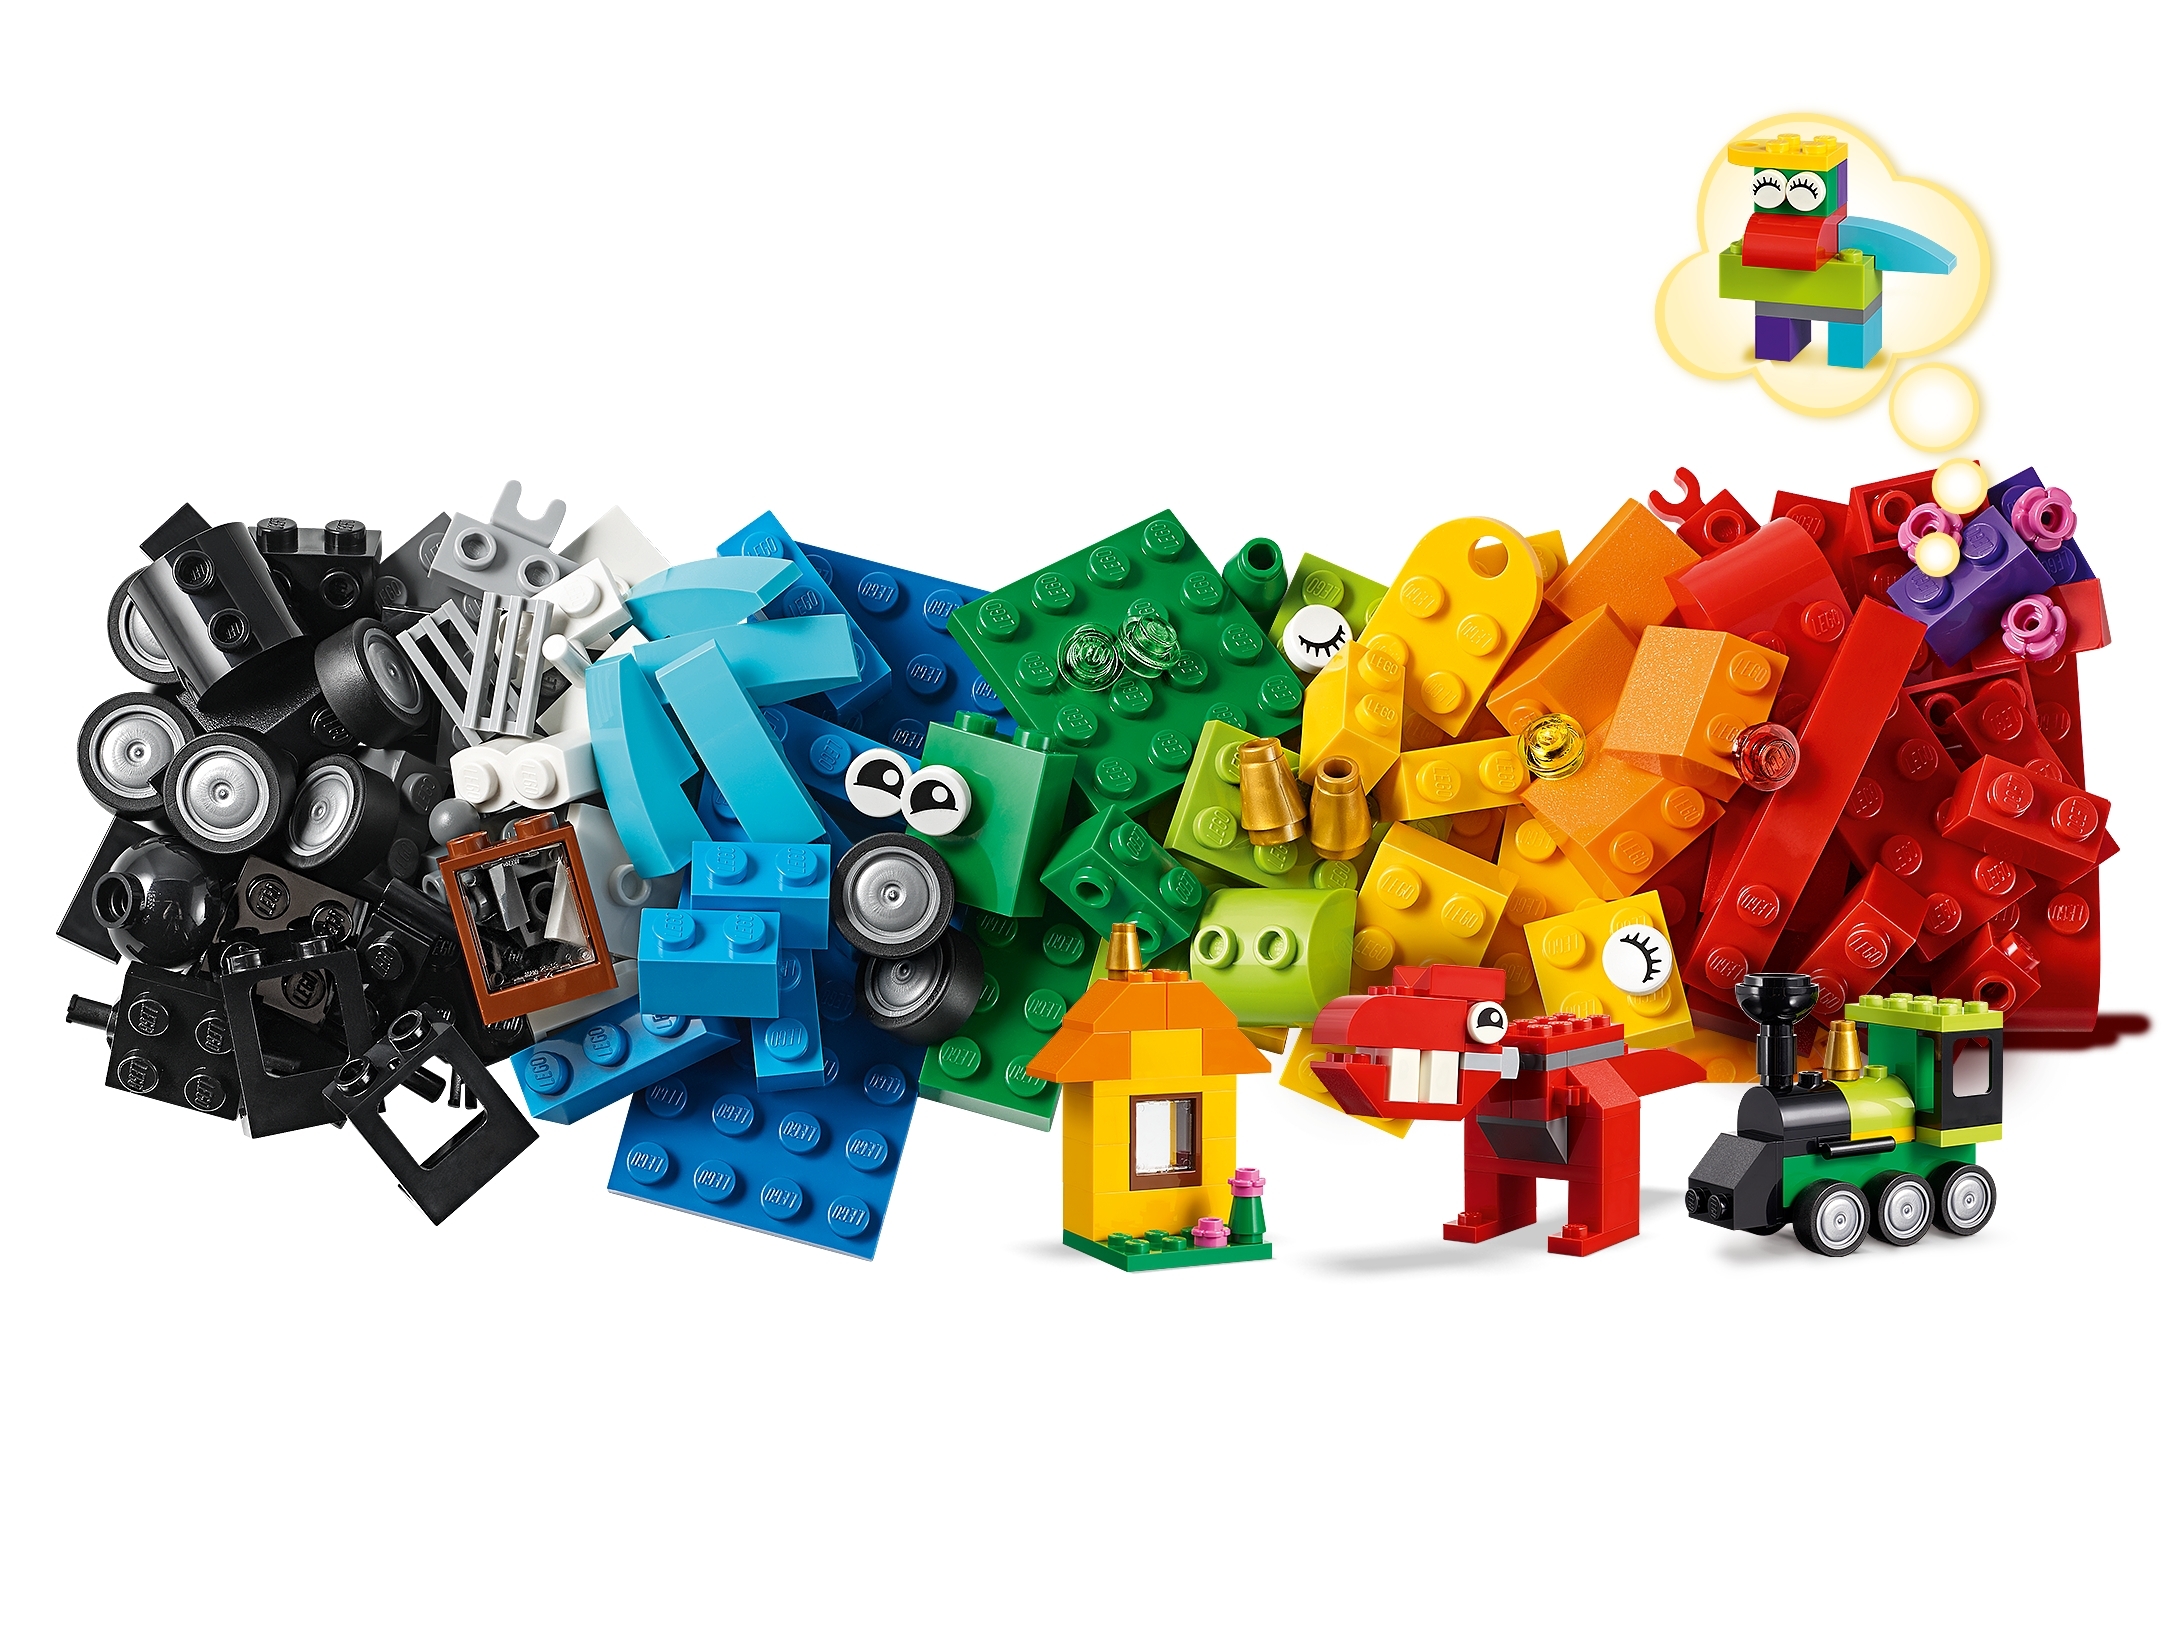 Play Platoon 1100 Piece Building Bricks Play Set, 10 Classic Colors Bricks,  Includes Wheels, Tires, Axles, Windows & Door Pieces- Compatible with Lego